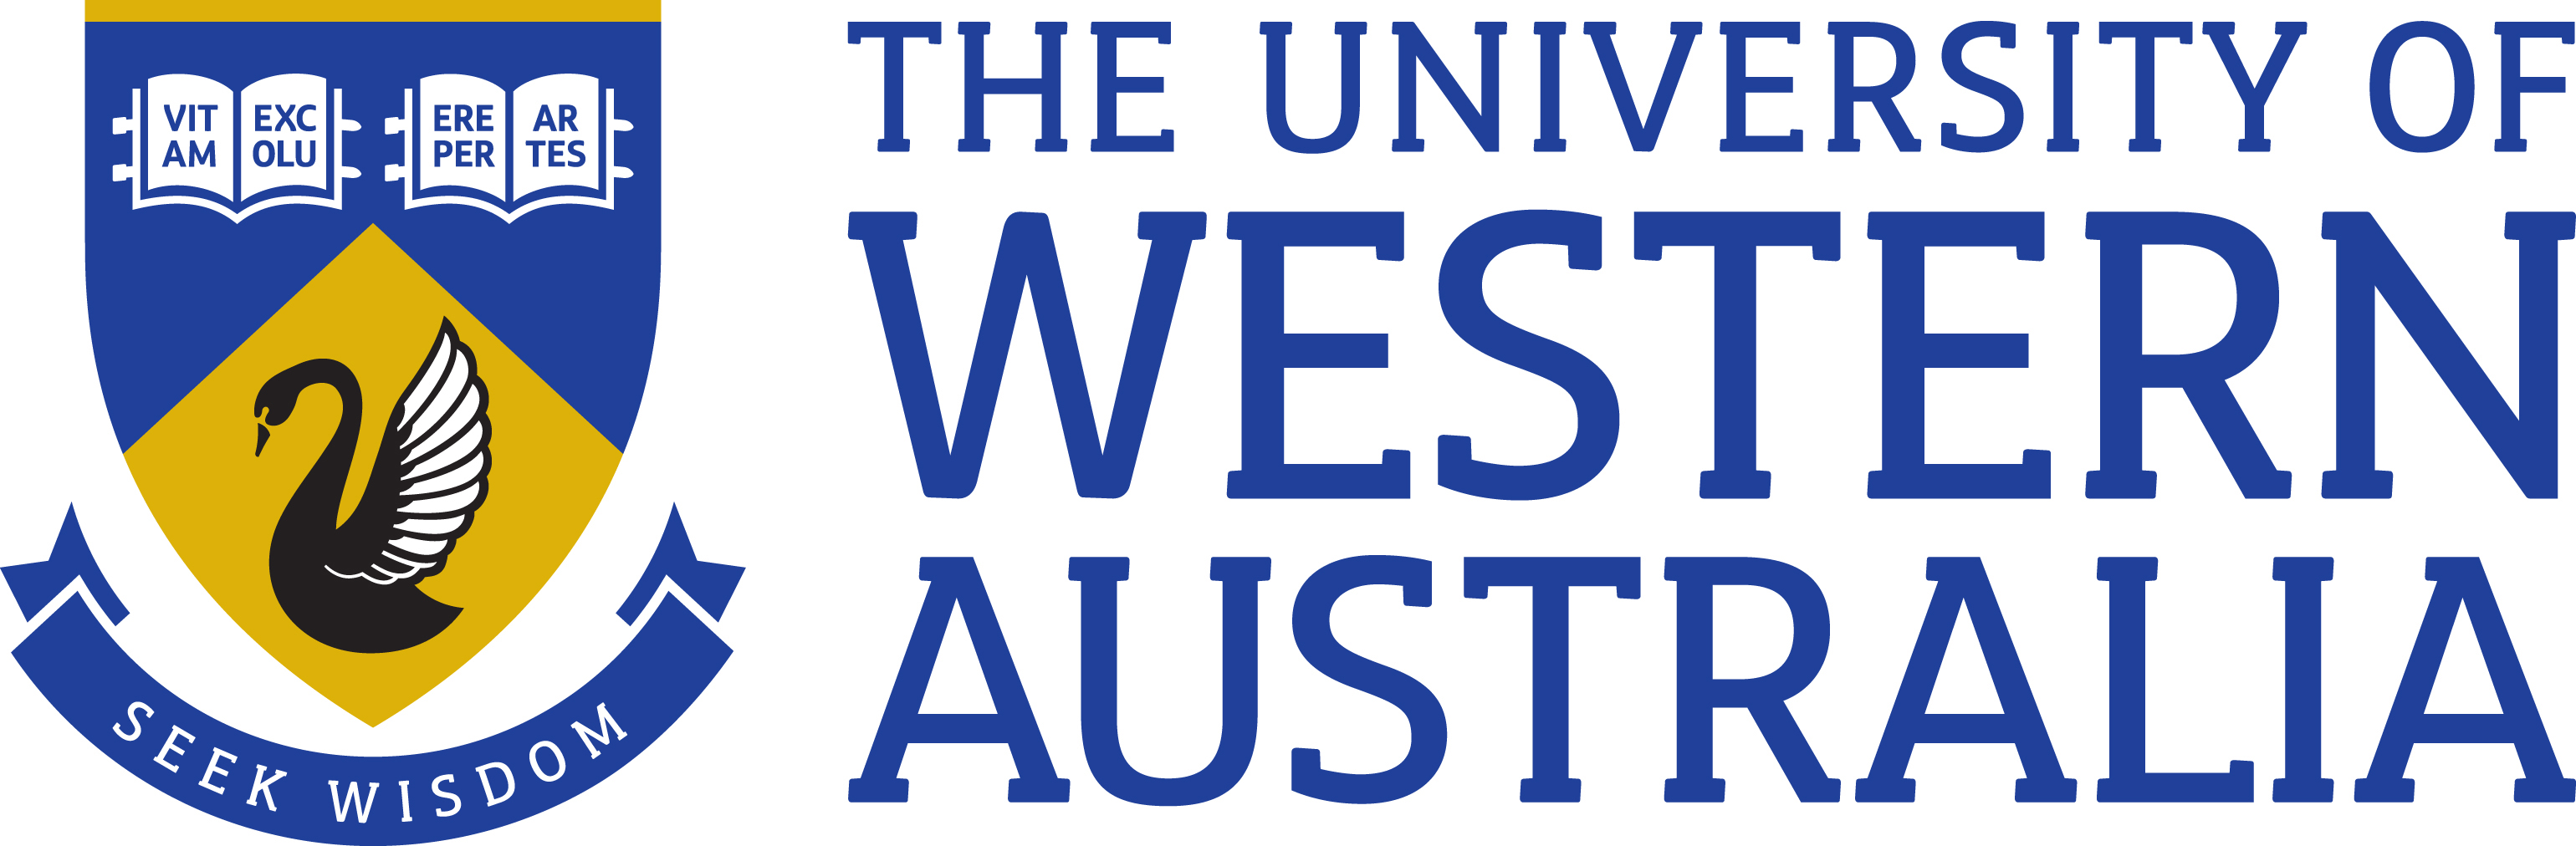 University_of_western-australia